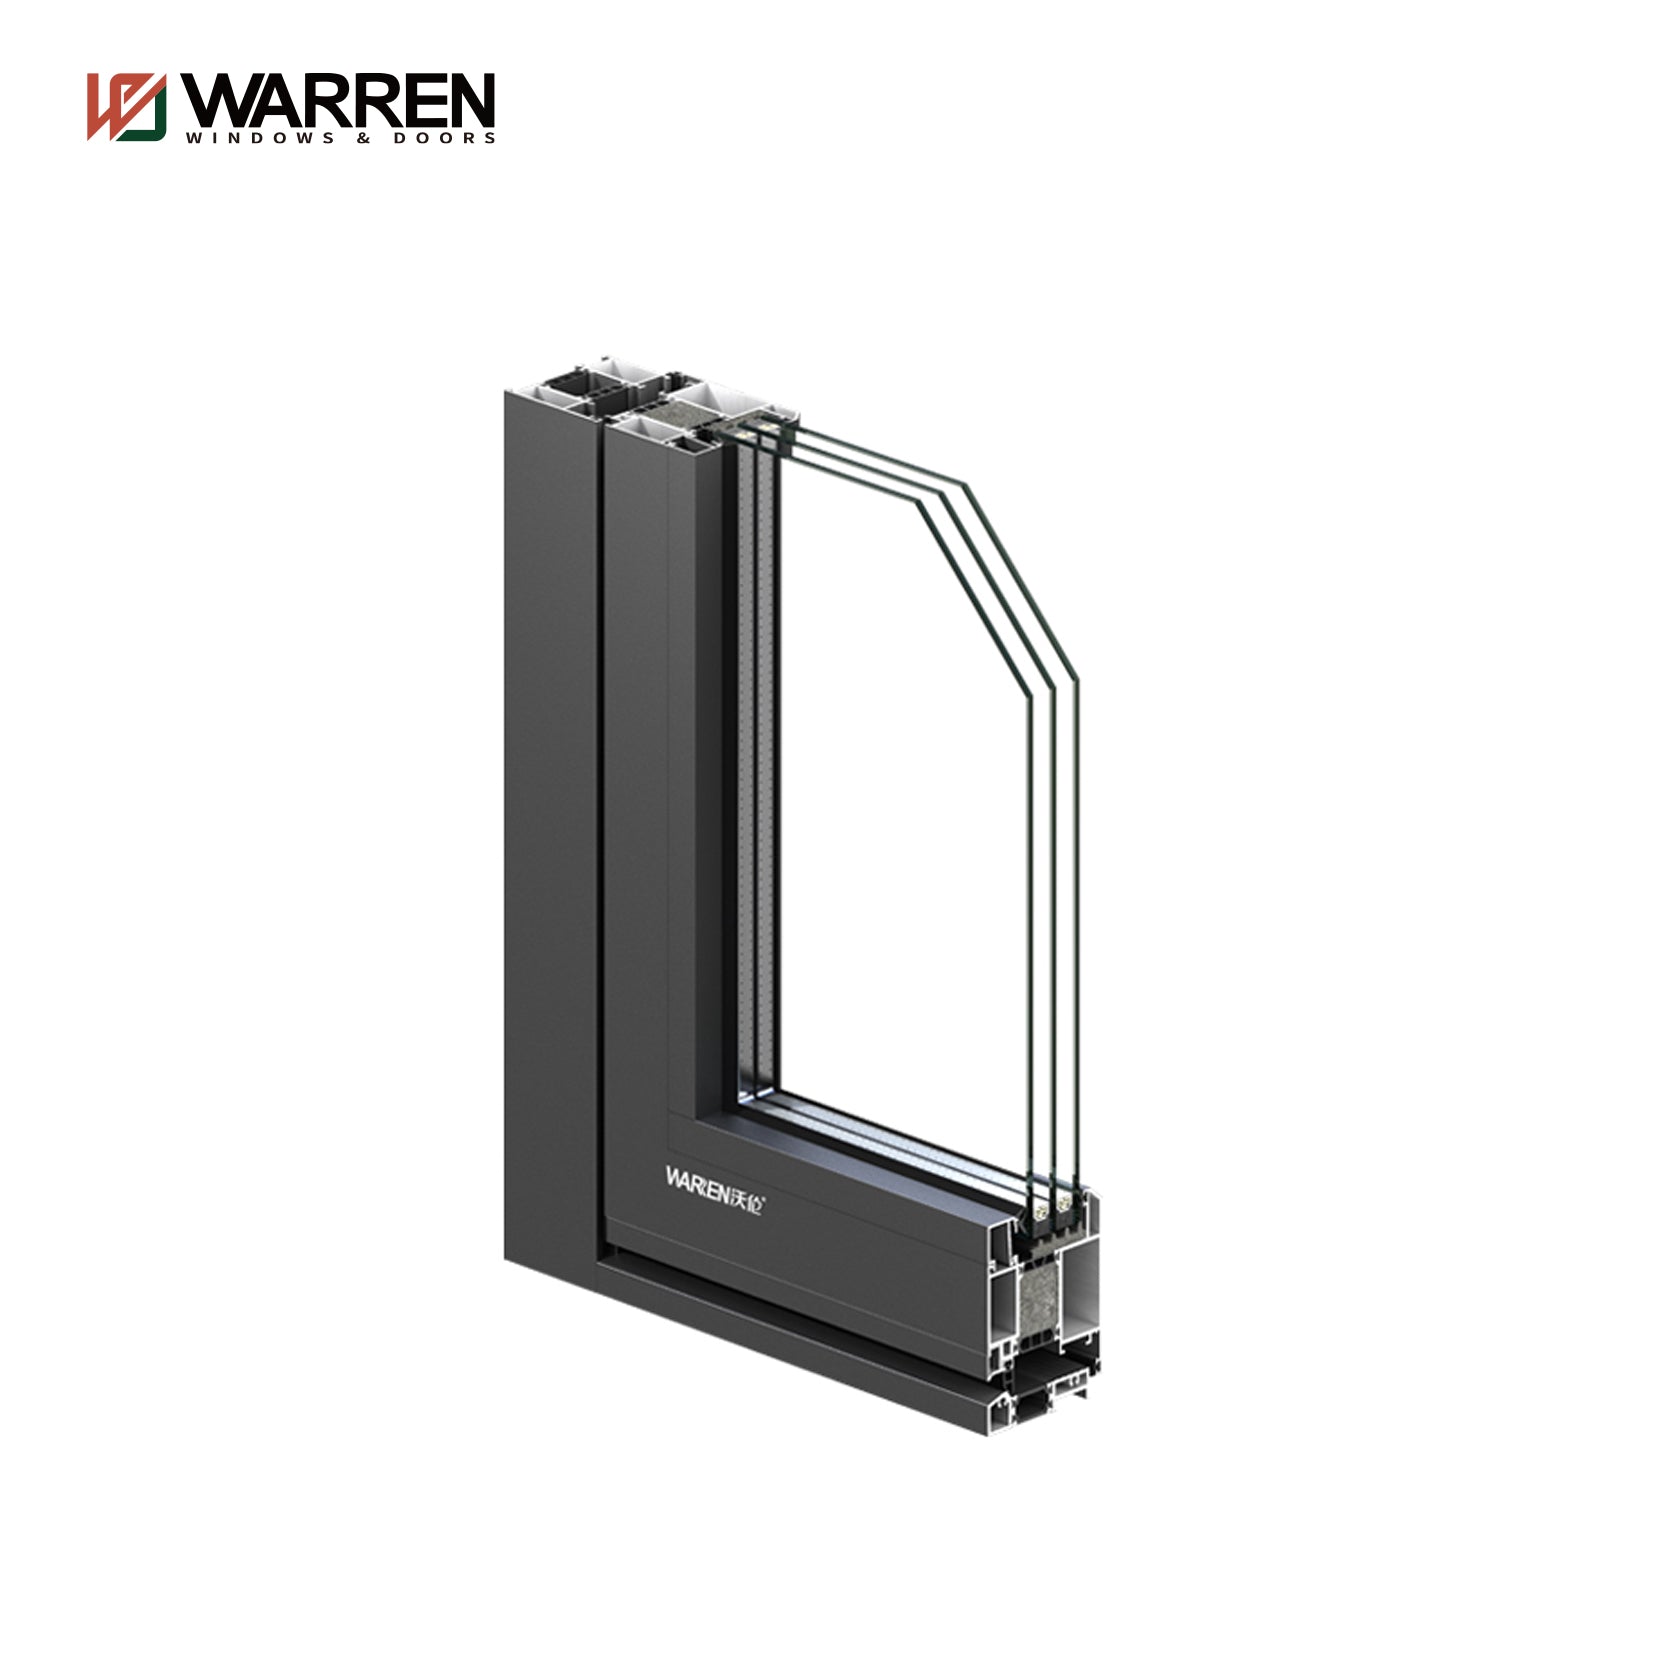 Warren 70 casement door with aluminium frame and customized hardware factory sale